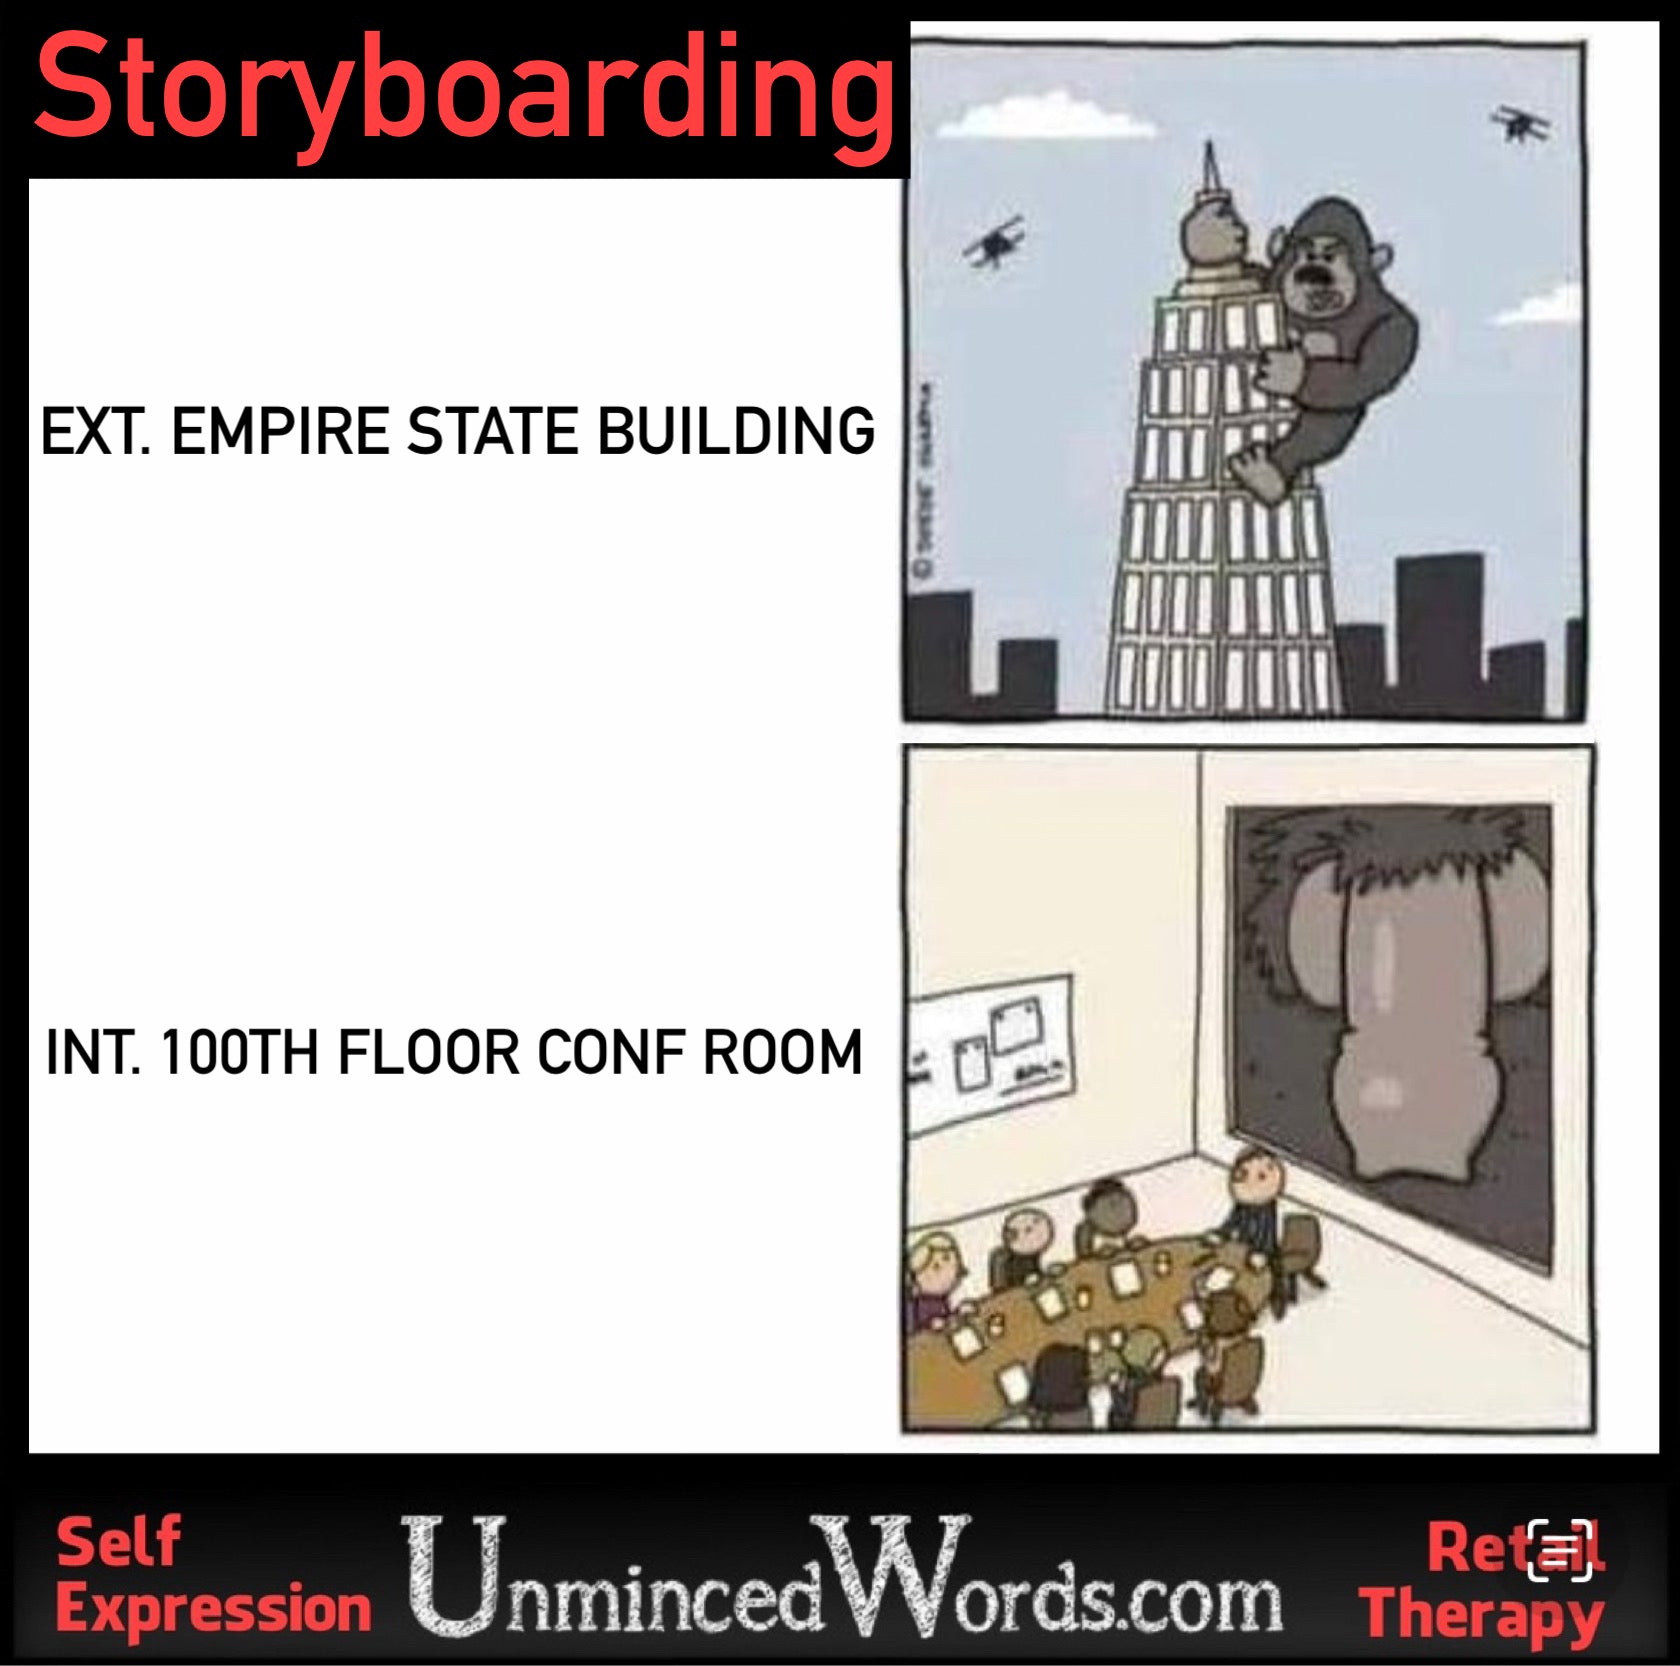 A King Kong storyboarding meme.